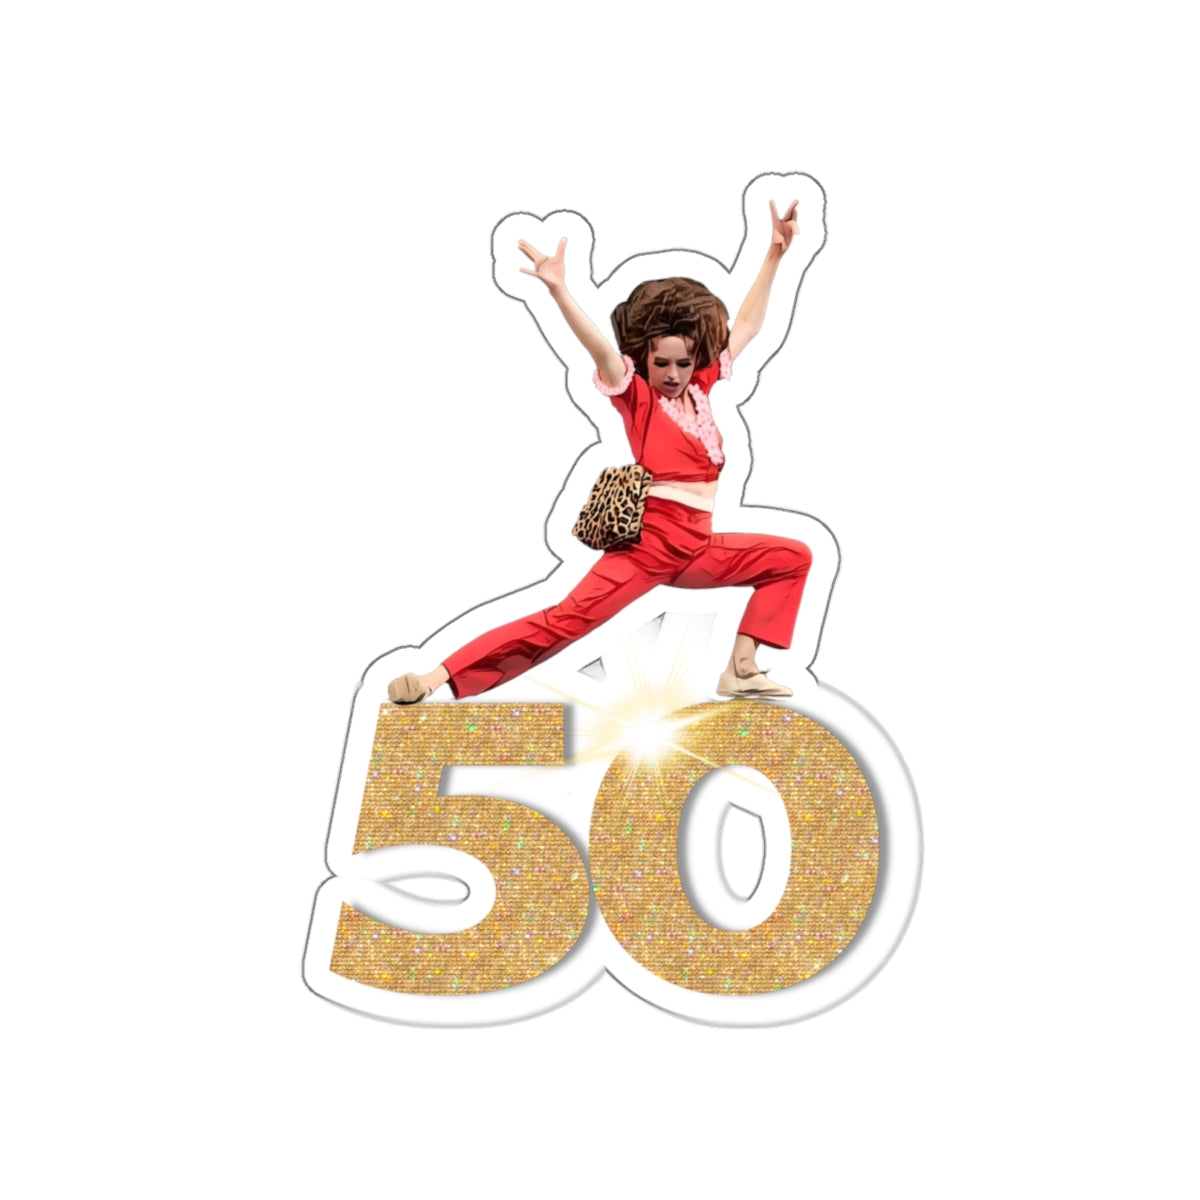 I'm 50, Sally O'Malley Sticker, Molly Shannon, I like to Kick and Stretch